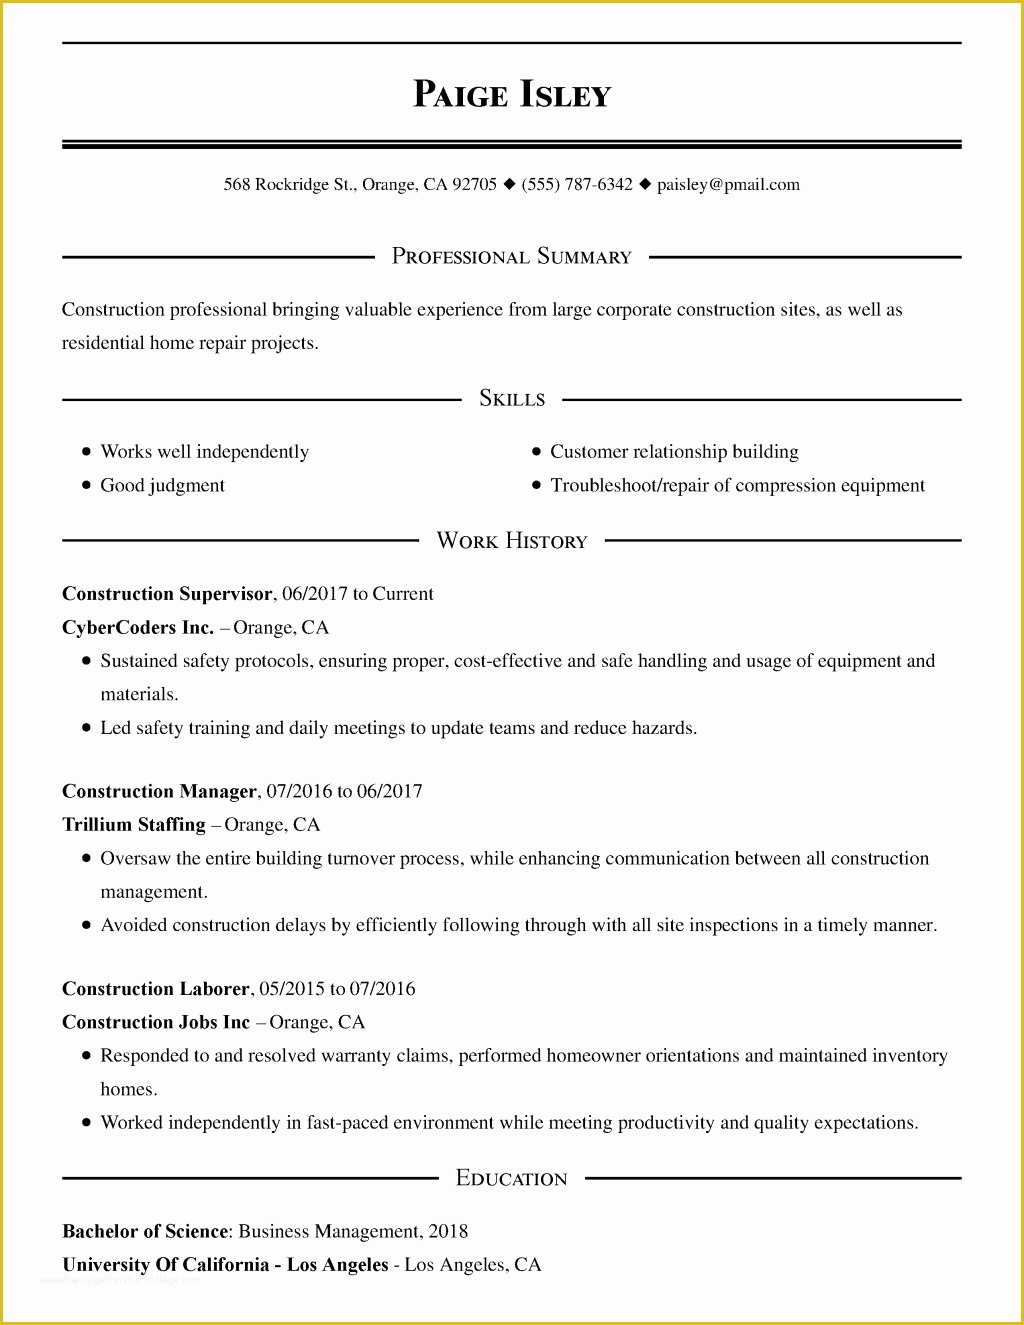 Free Professional Resume Templates Microsoft Word Of Best Professional Resume Templates 2018 Tag 53 Fantastic